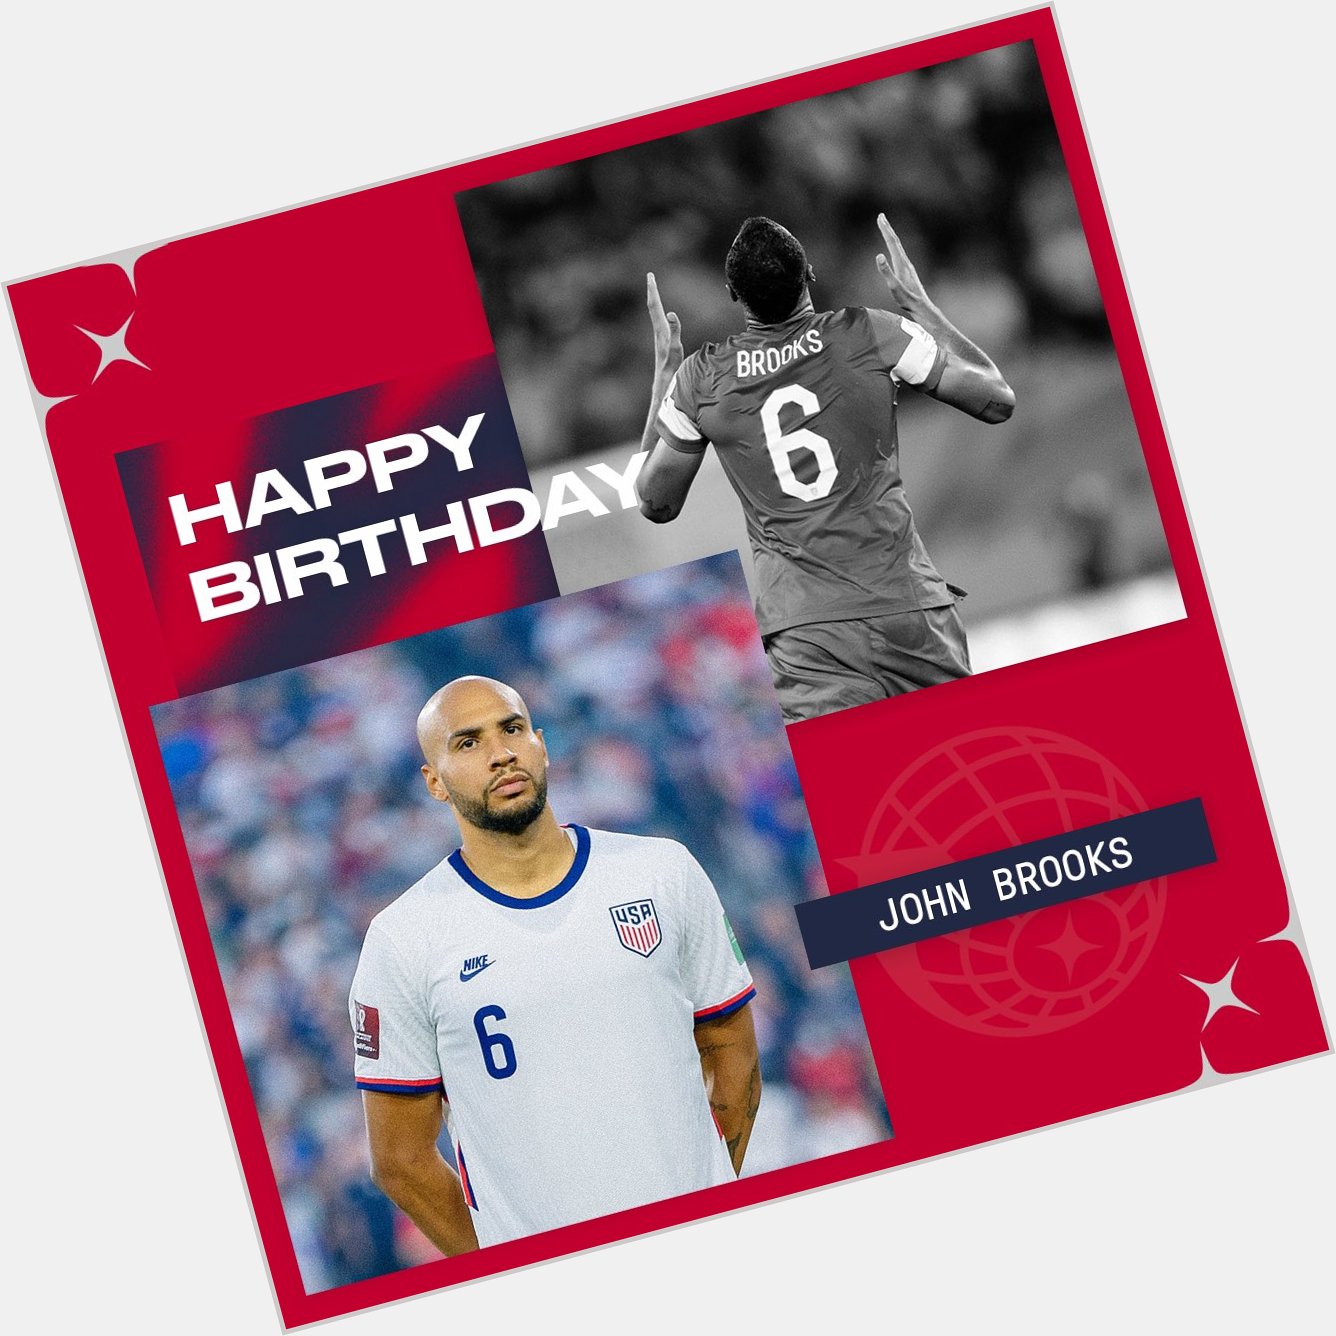 Happy birthday, John Brooks 